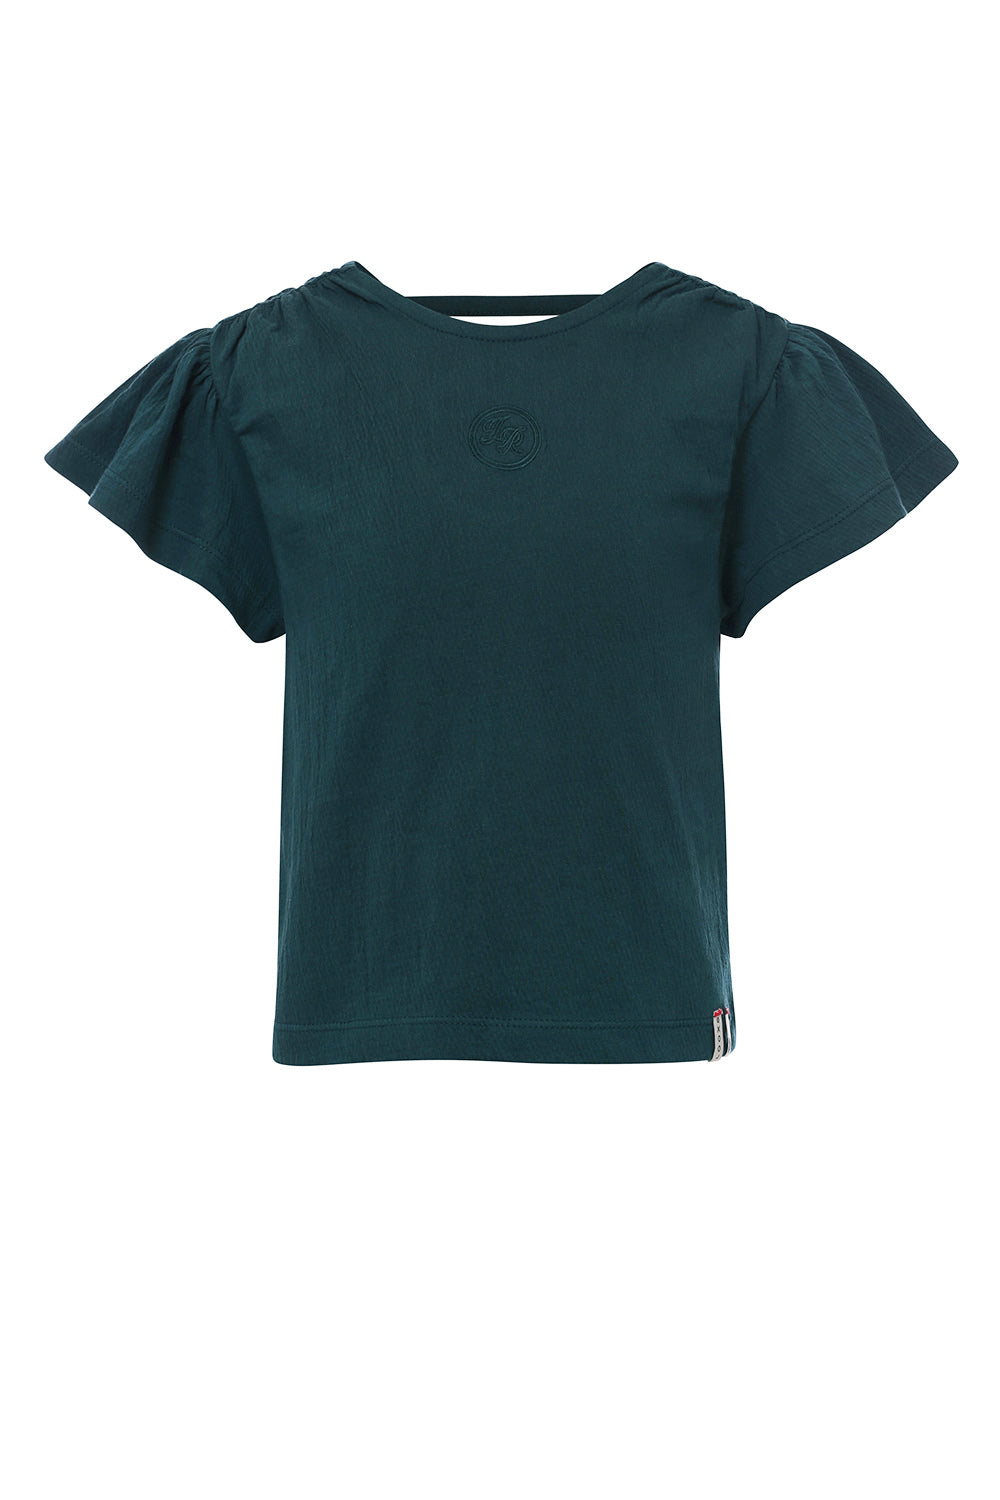 LOOXS 10sixteen Crinkle Jersey T-Shirt